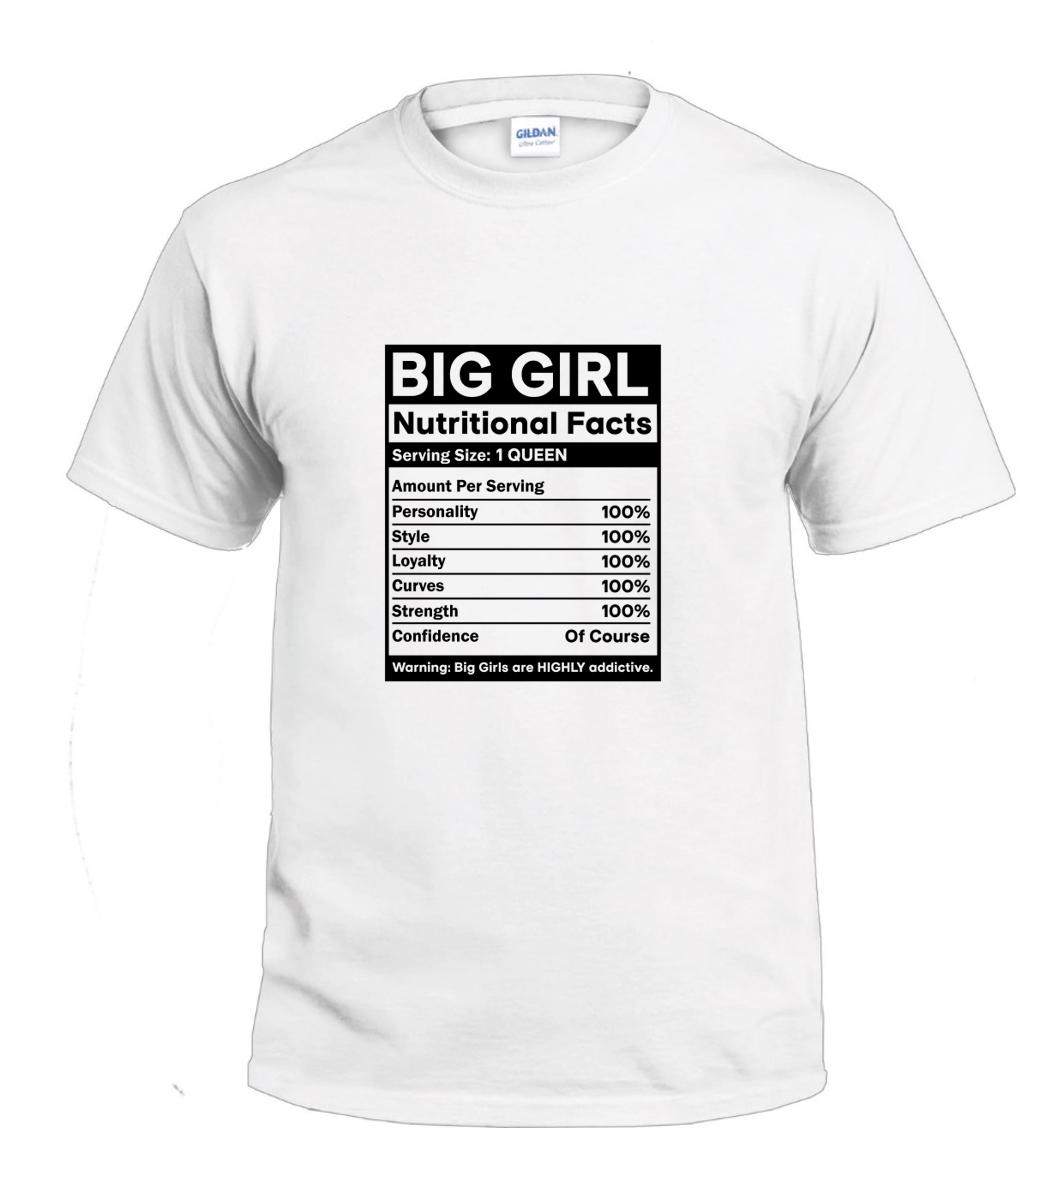 Big Girl Nutritional Facts t-shirt